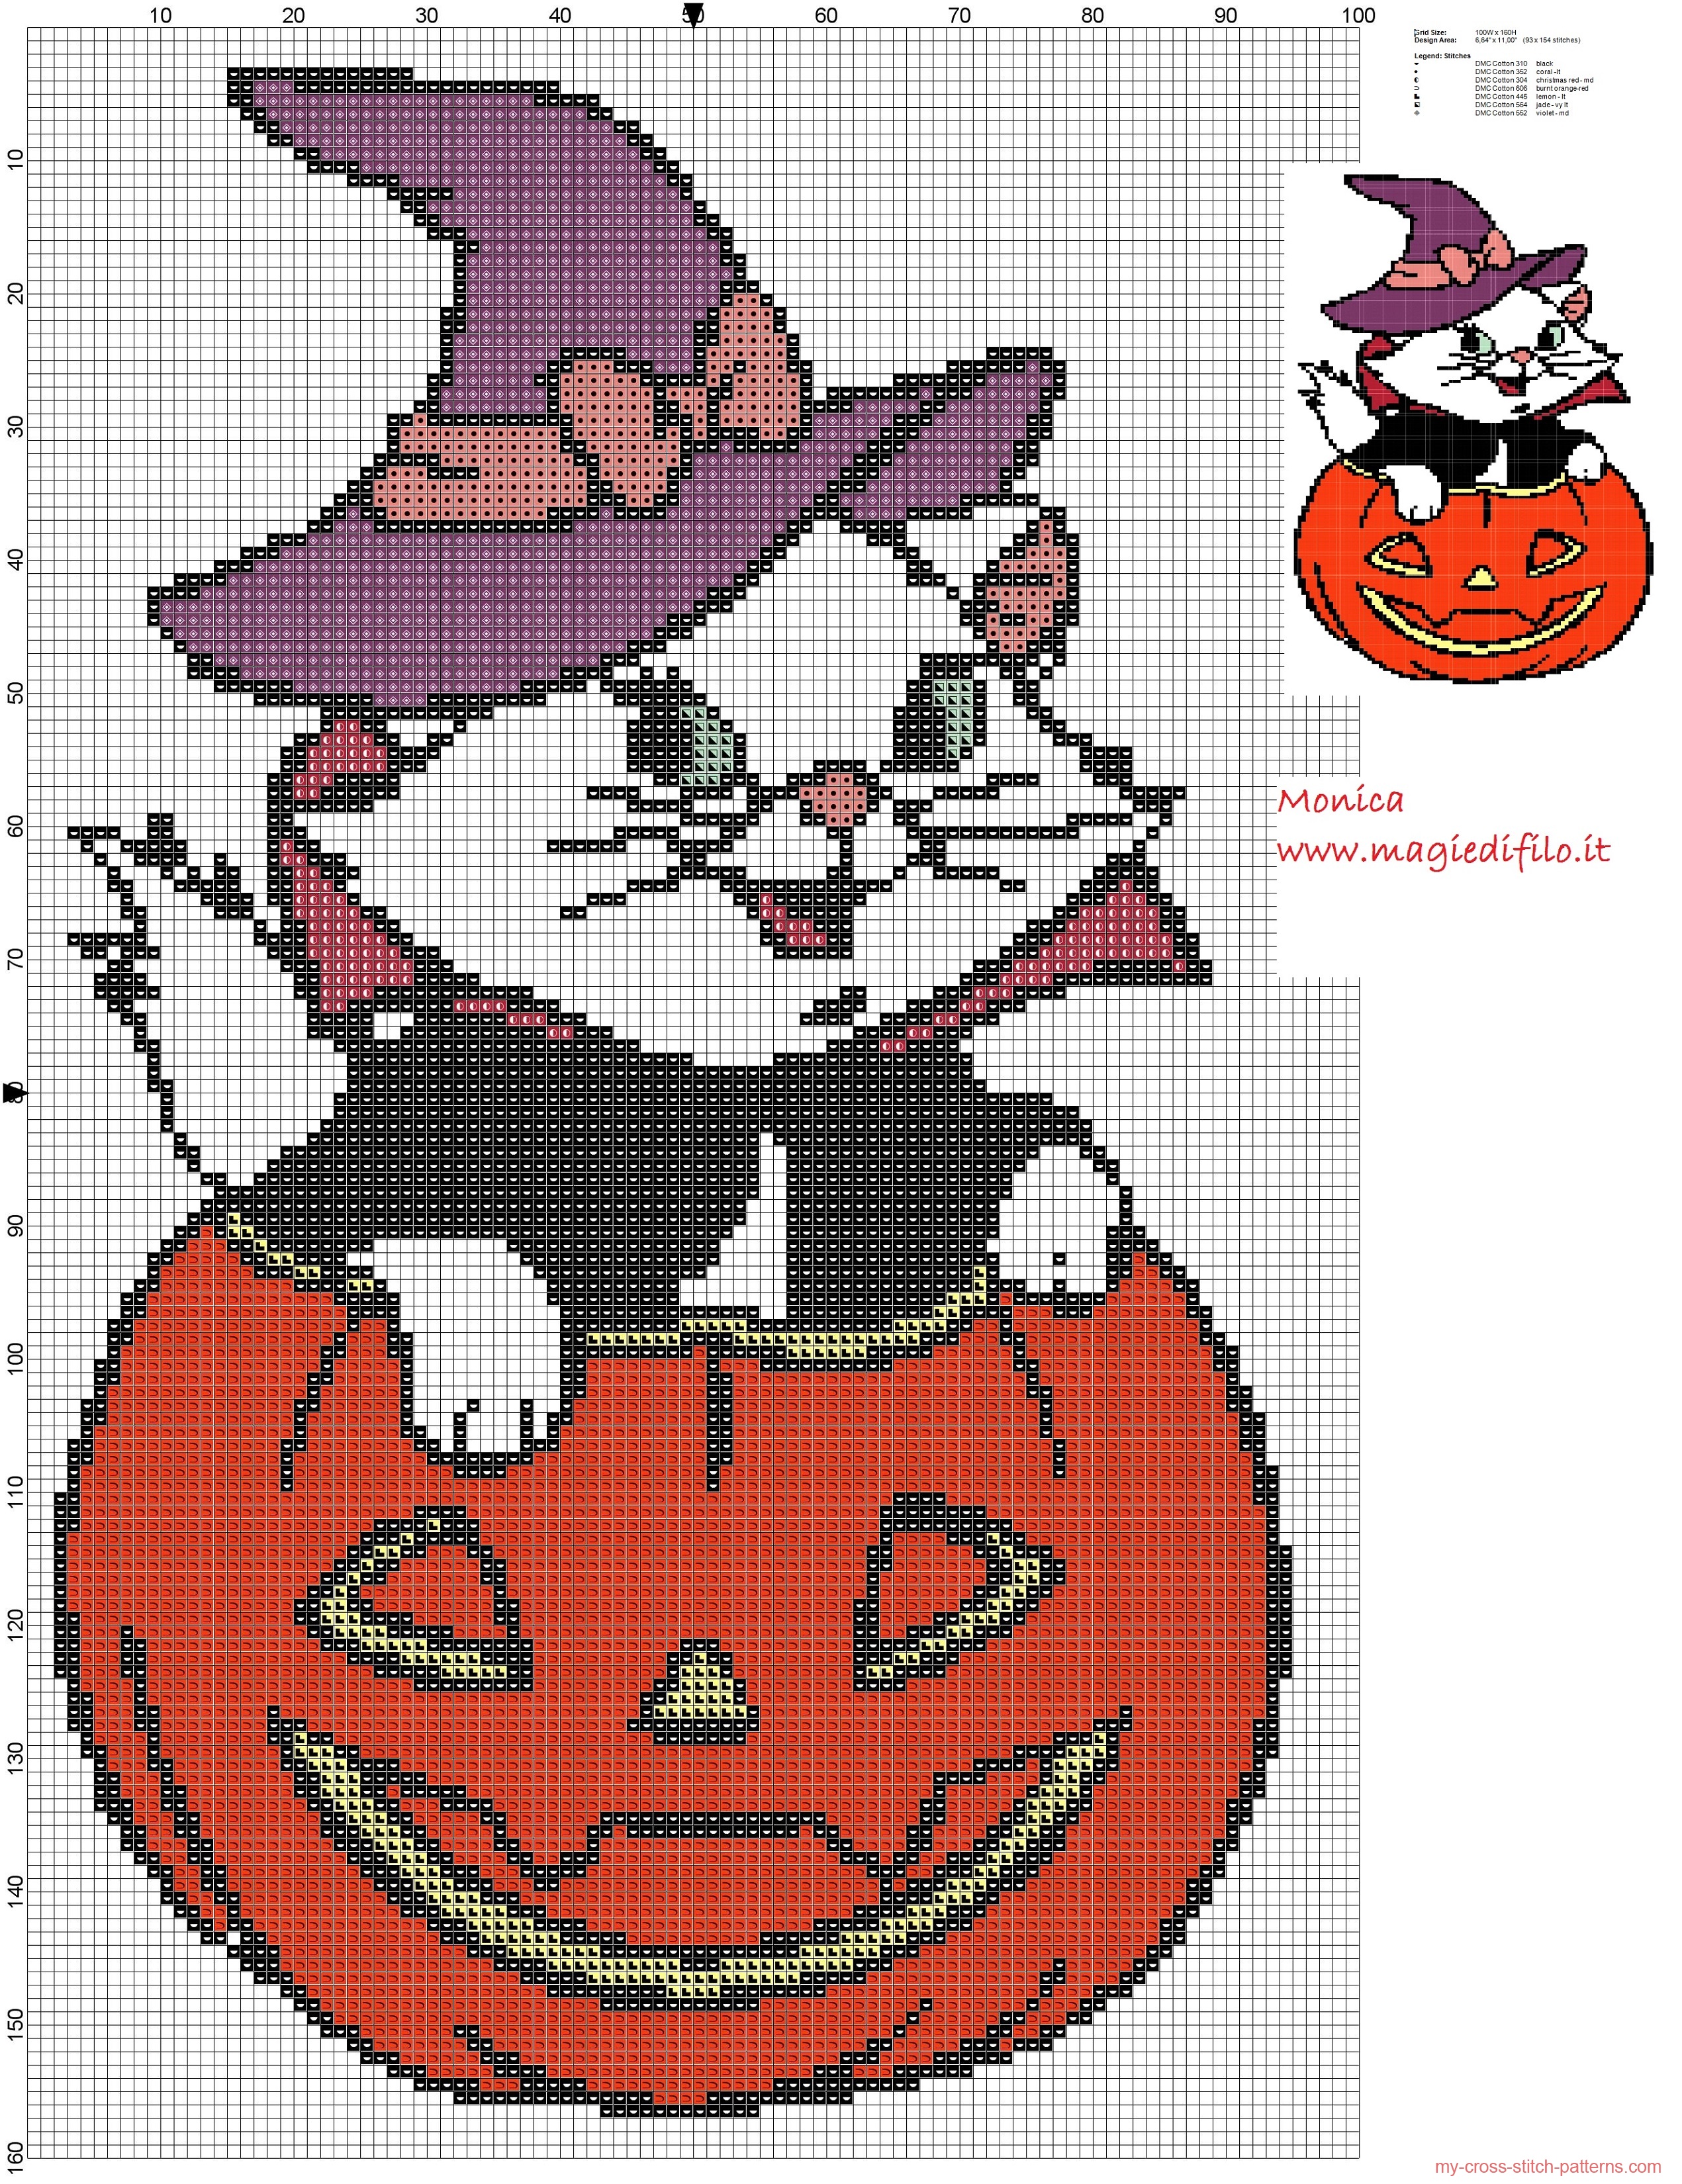 marie_aristocats_on_the_pumpkin_cross_stitch_pattern